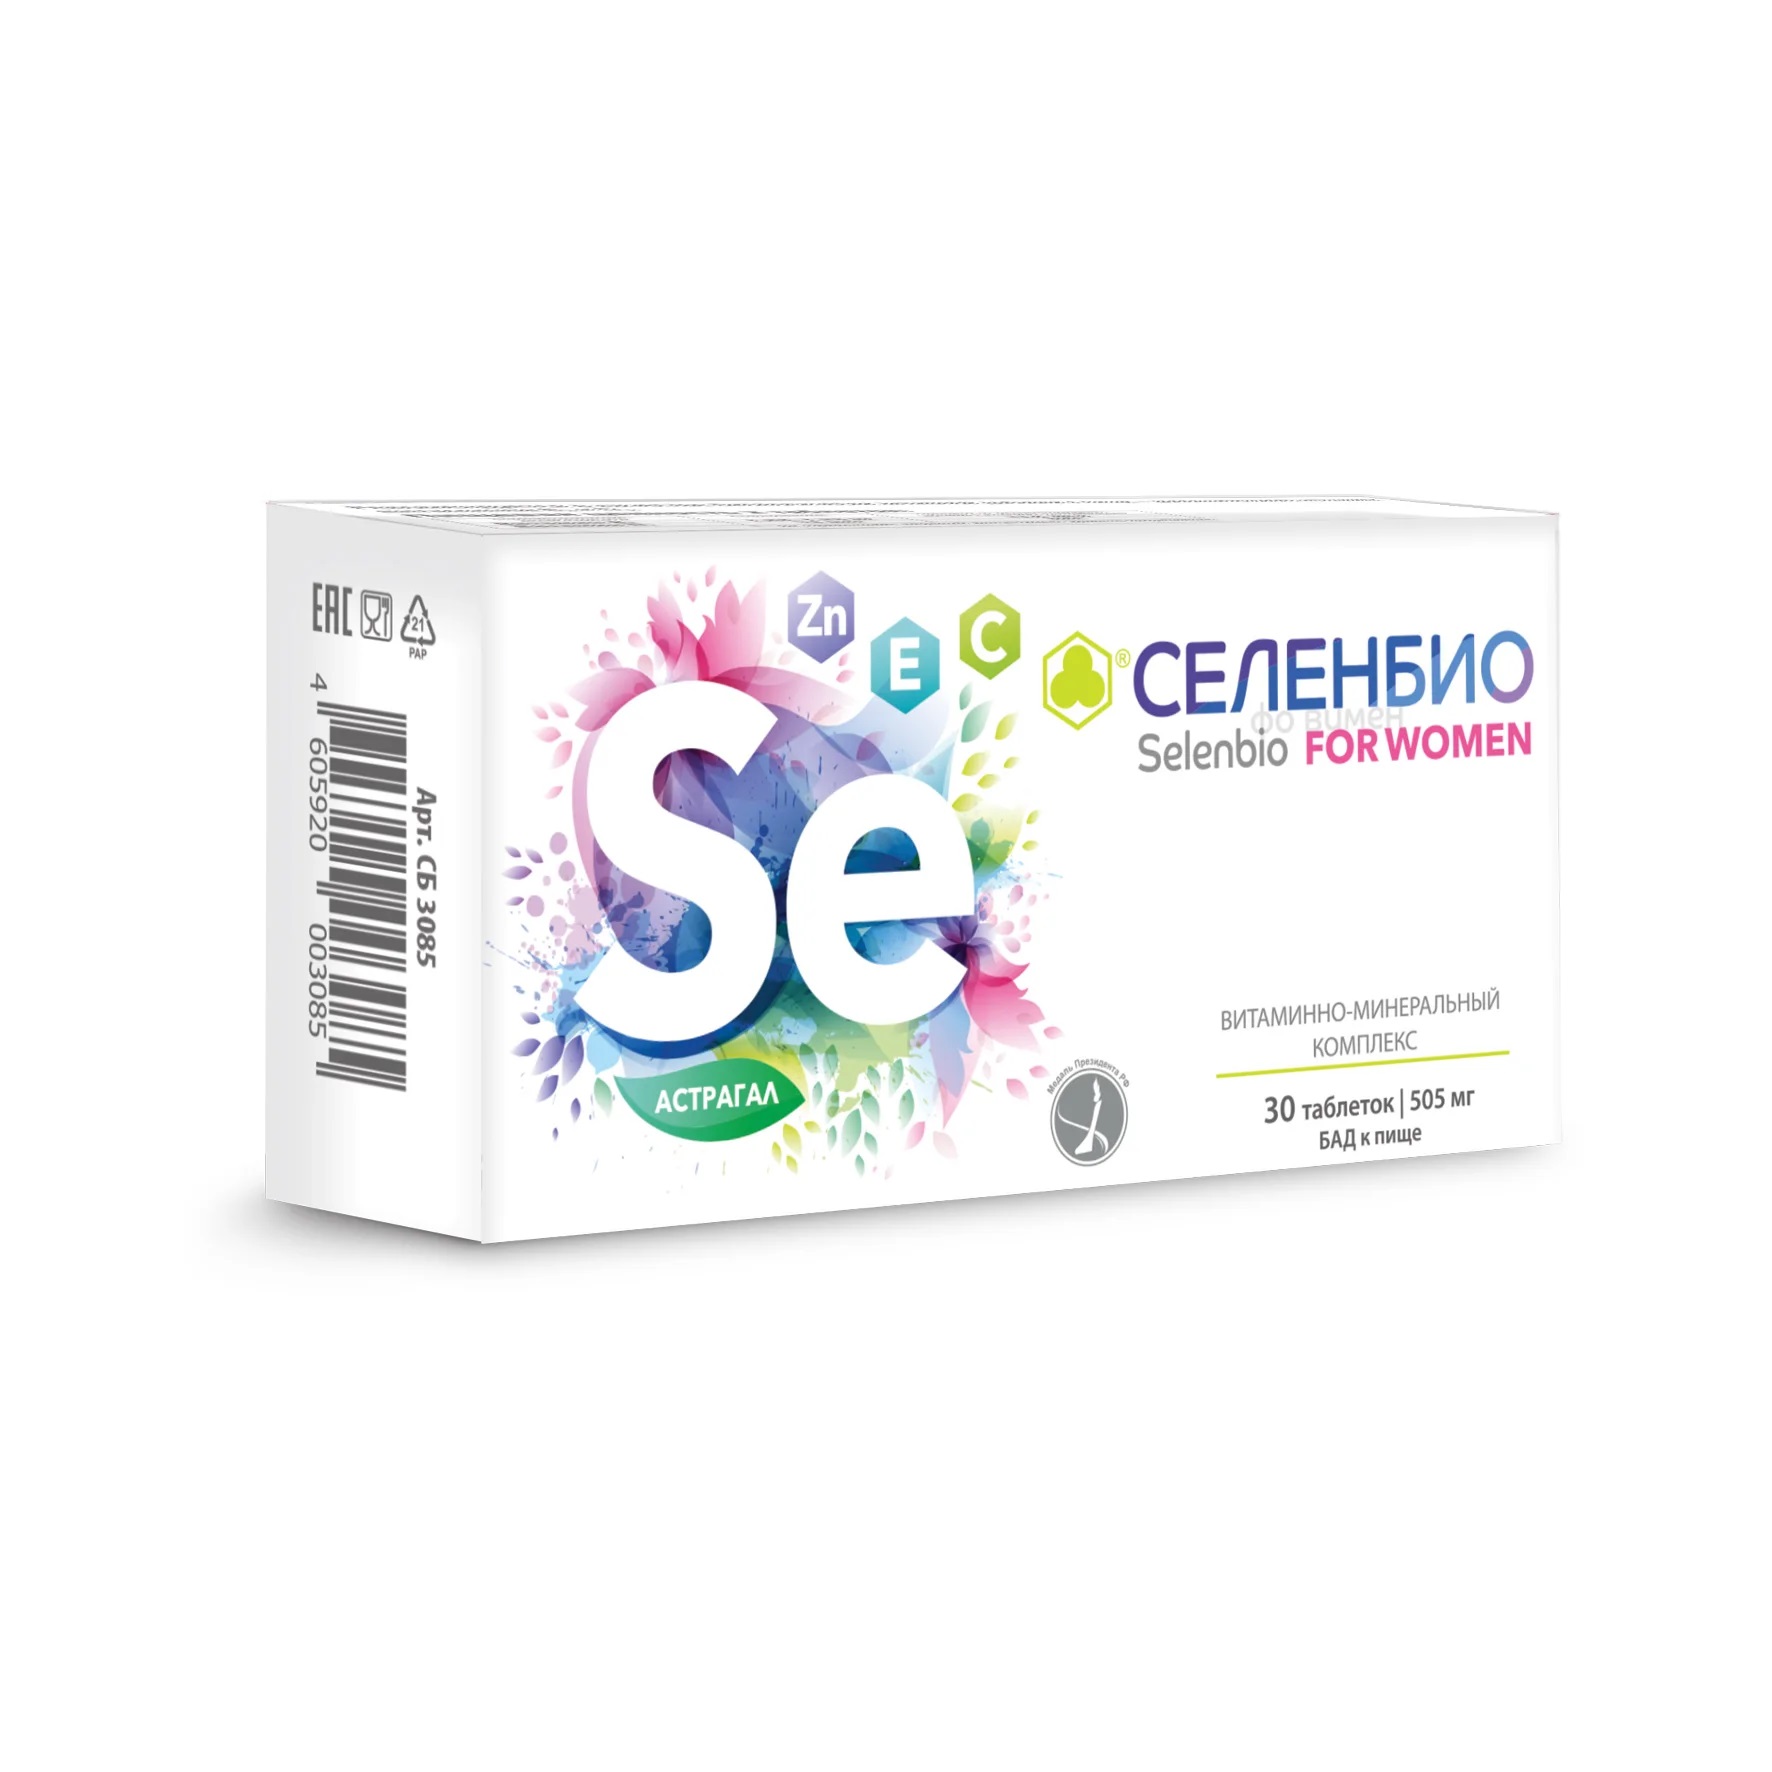 Селенбио for women, таблетки 505 мг, 30 шт. women s foldable